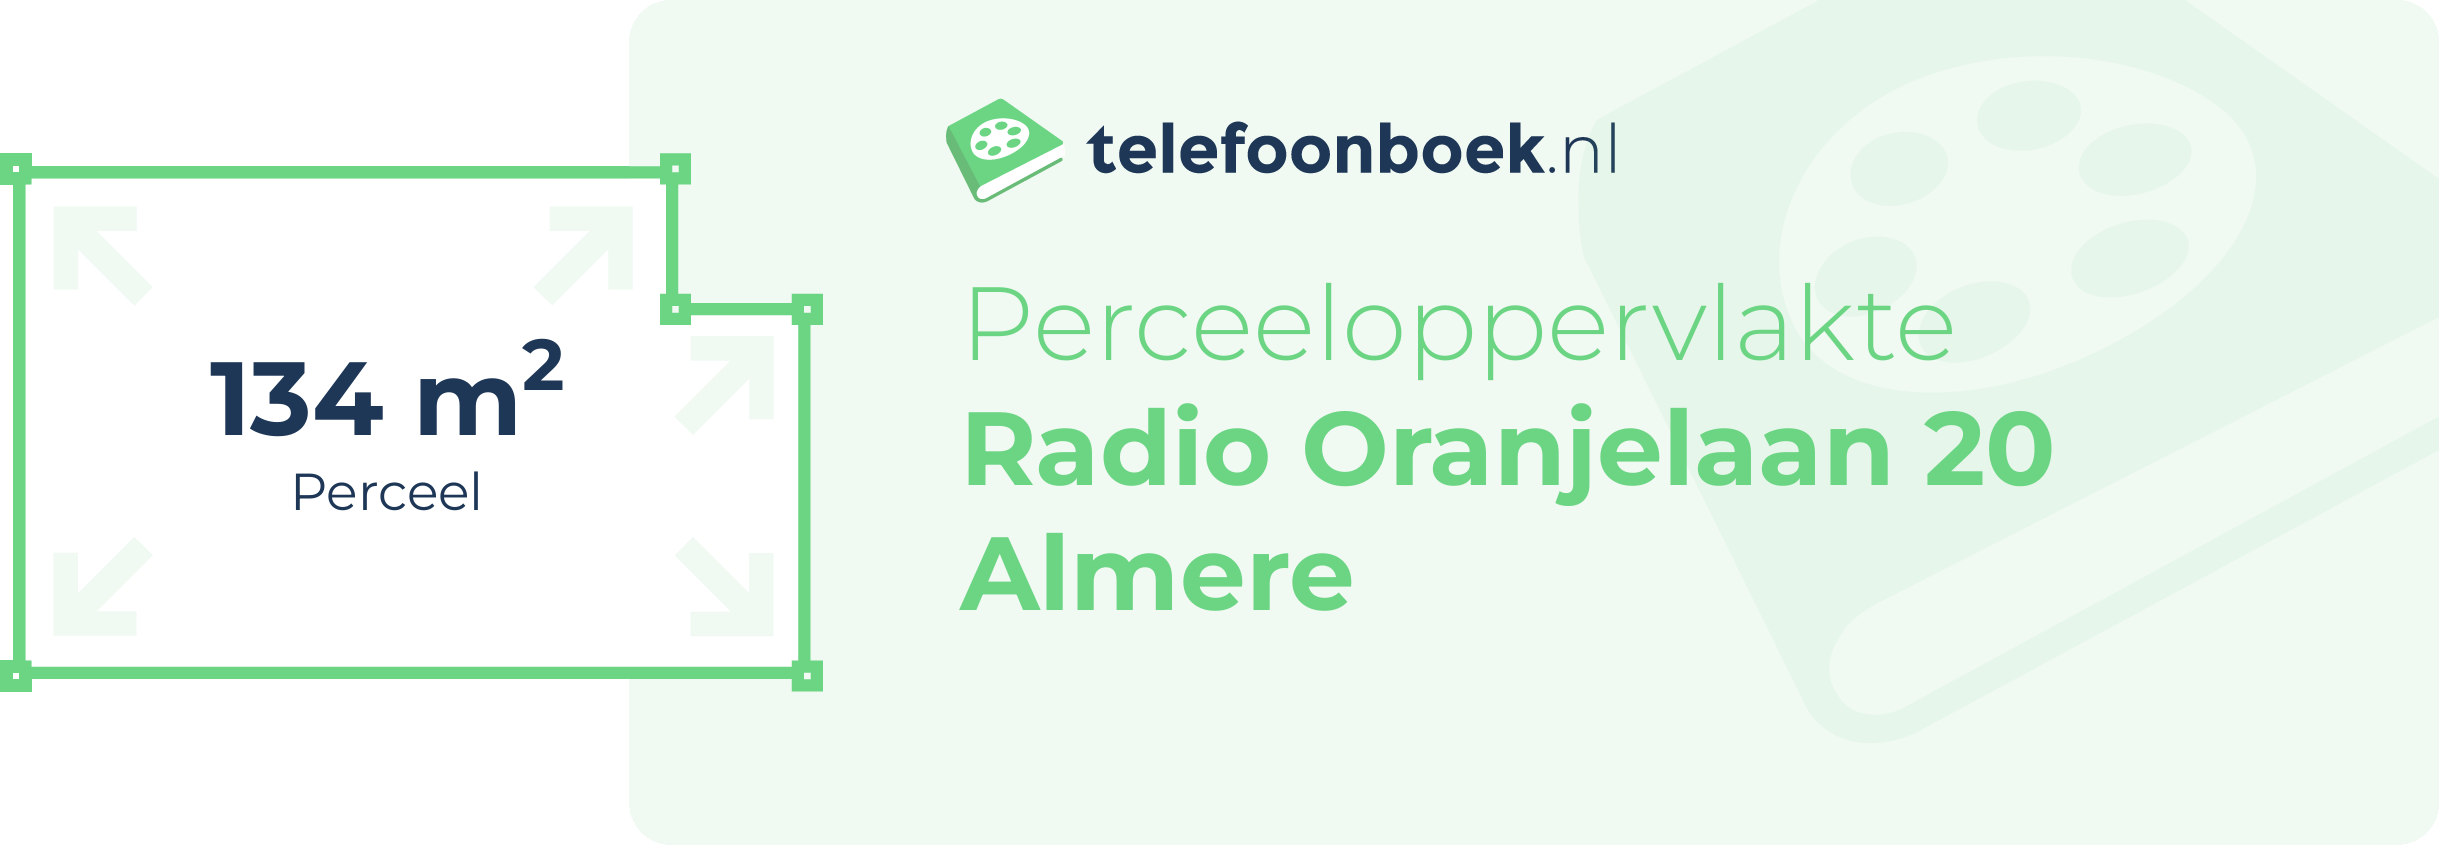 Perceeloppervlakte Radio Oranjelaan 20 Almere